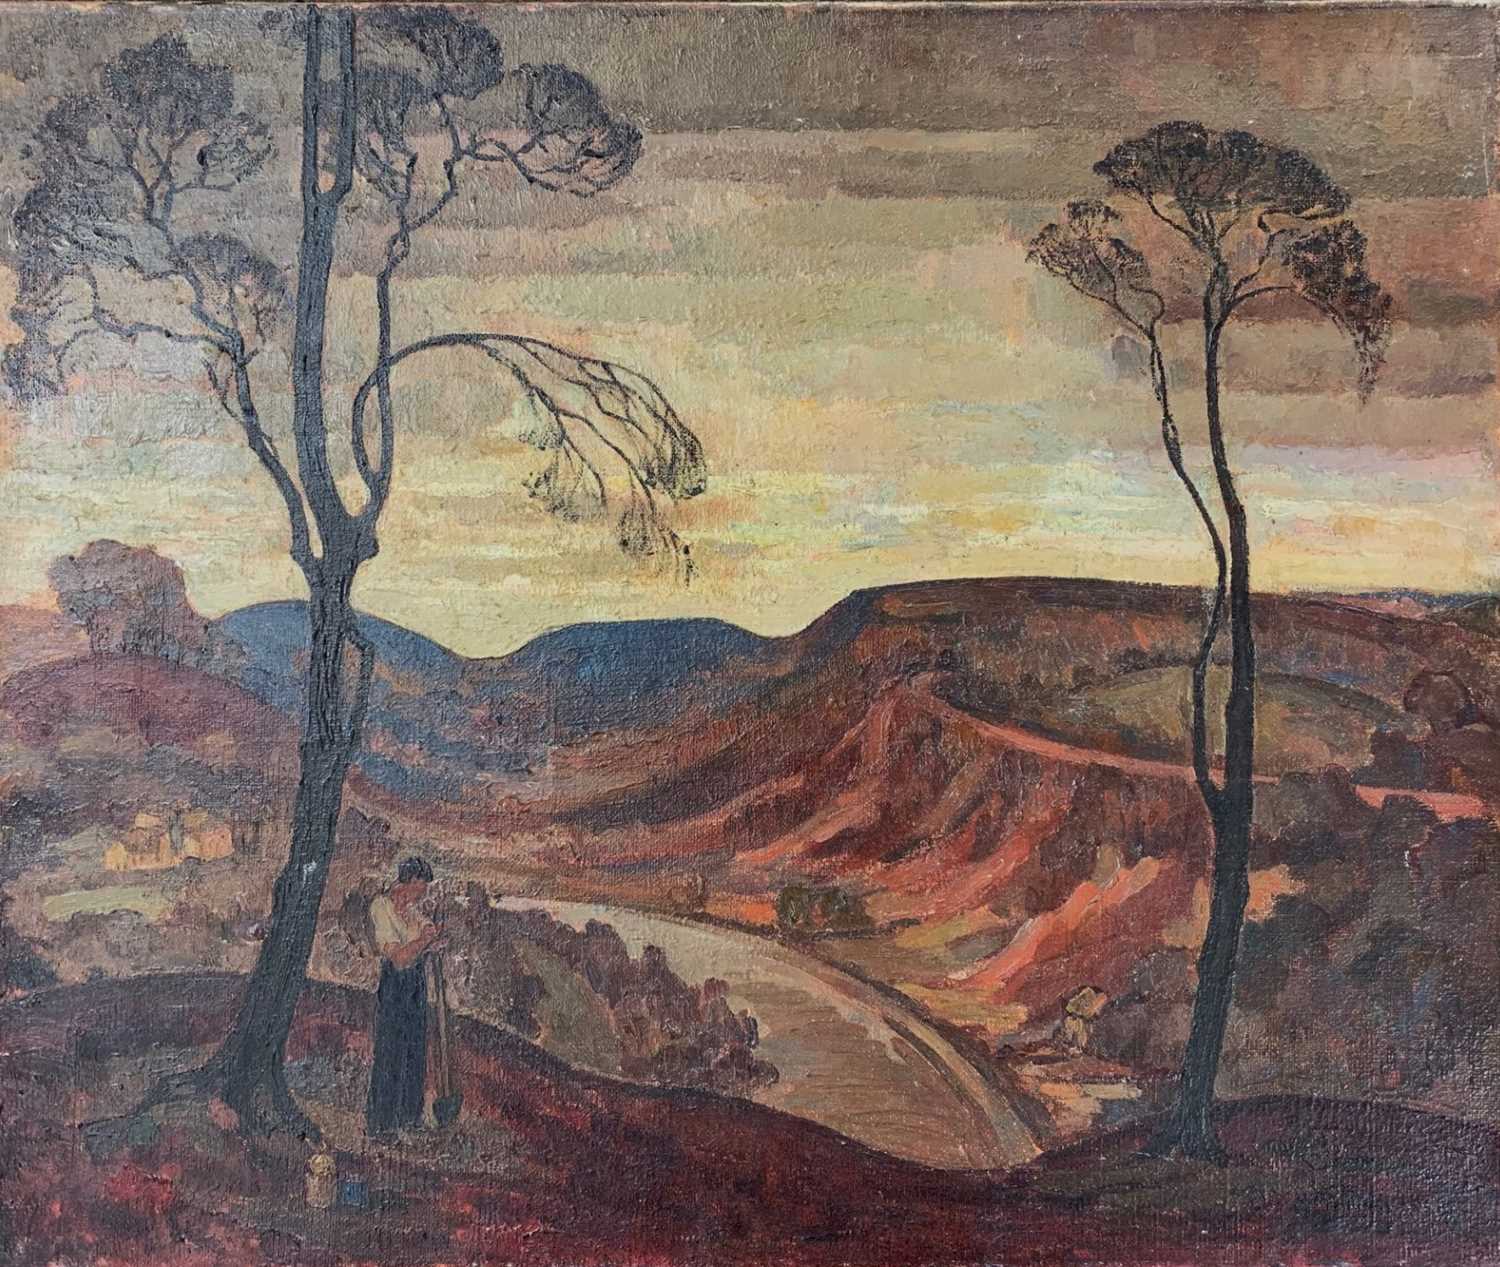 Italian School, post impressionist, 20th century, Italian / Tuscany landscape with a figure